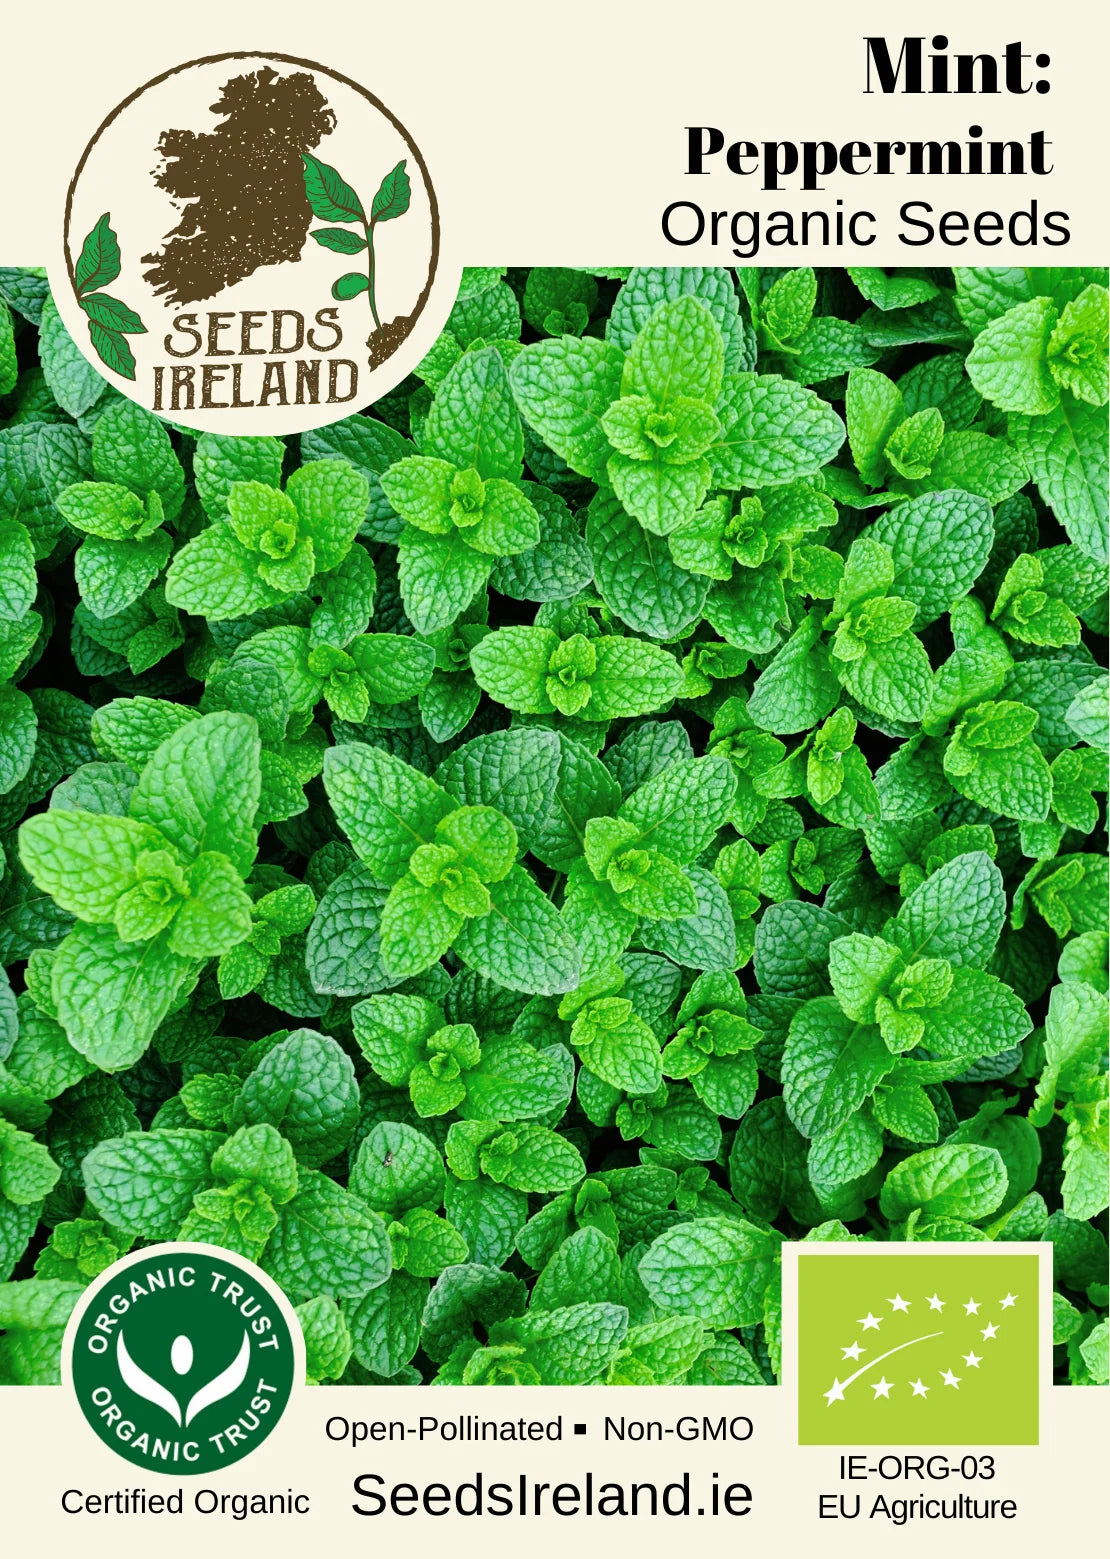 Mint: Peppermint Organic Seed